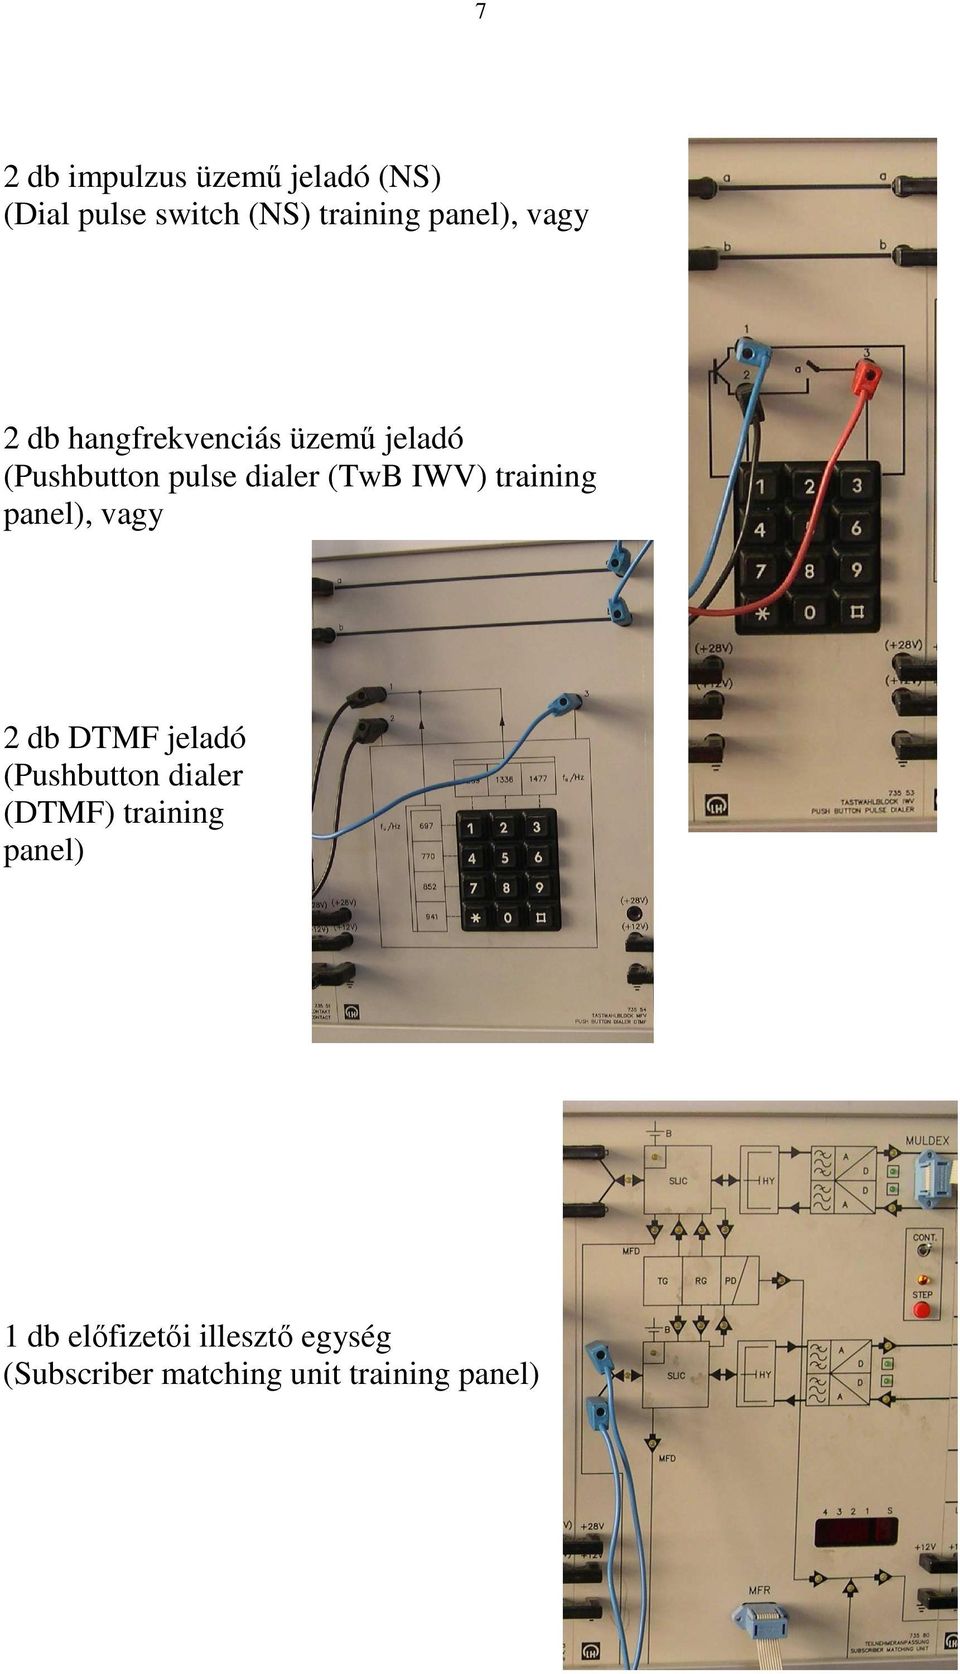 training panel), vagy 2 db DTMF jeladó (Pushbutton dialer (DTMF) training